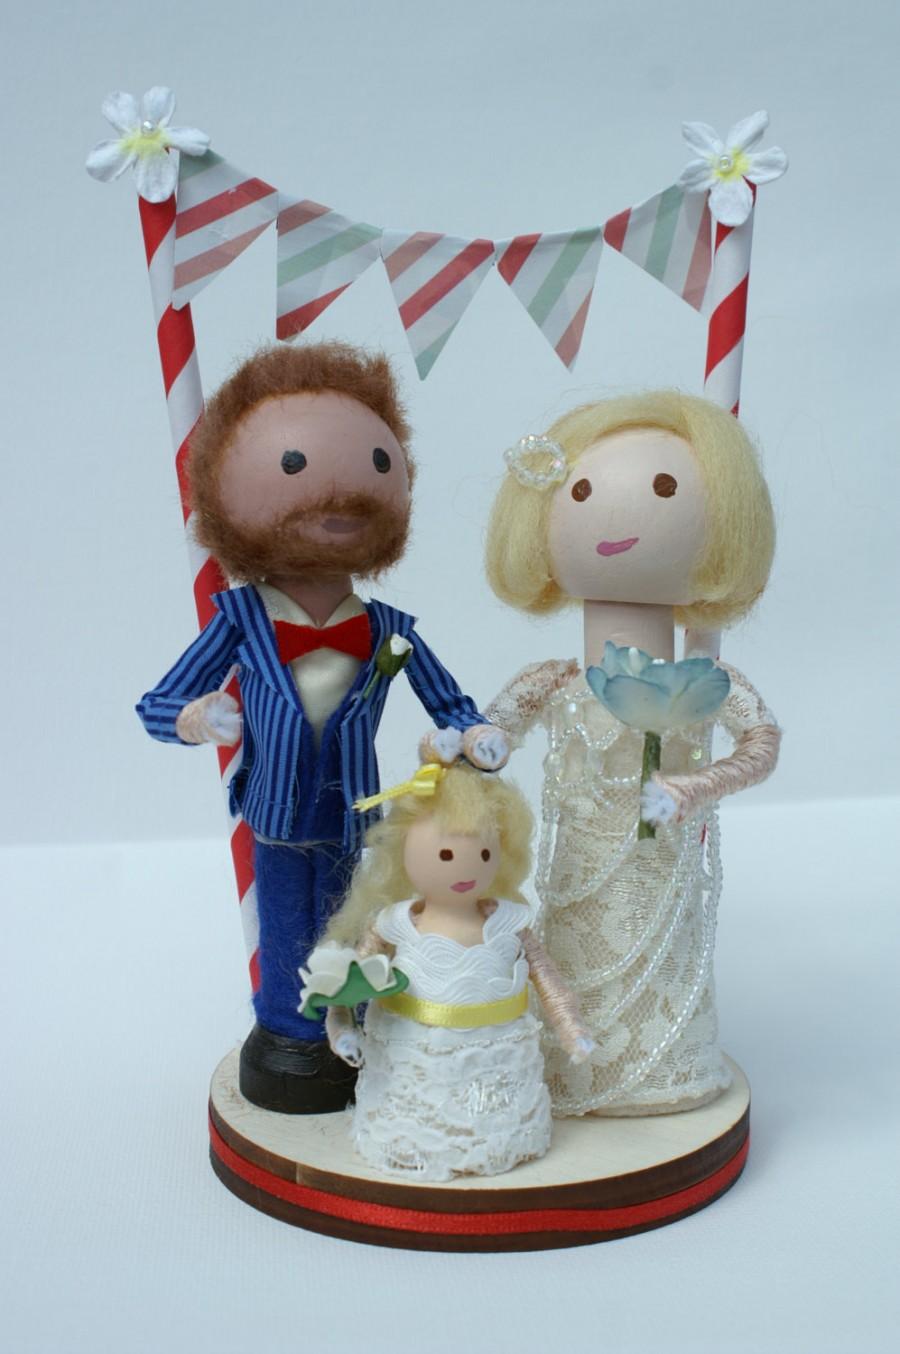 زفاف - Handmade, Customized, Bride and Groom, Wooden Peg Doll, Wedding Cake Topper